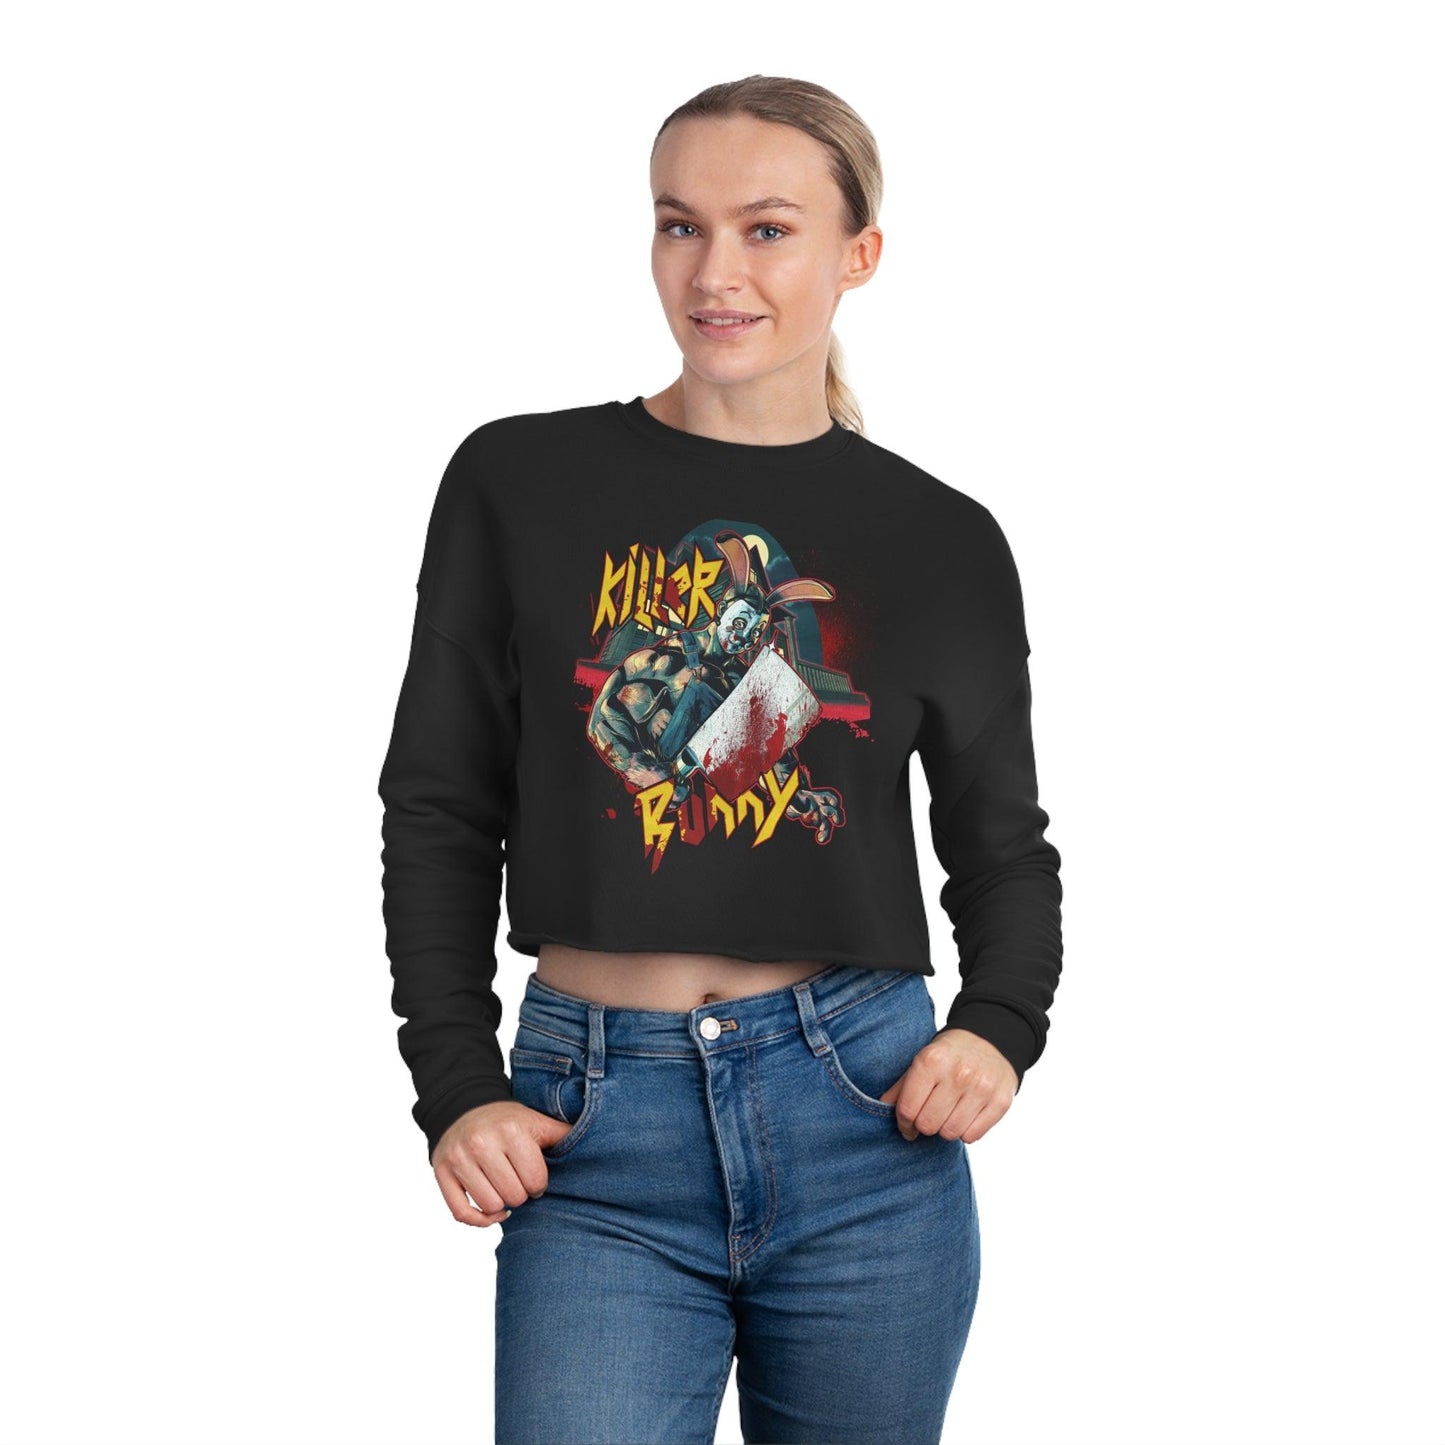 Killer Bunny - Women's Cropped Sweatshirt - Shaneinvasion